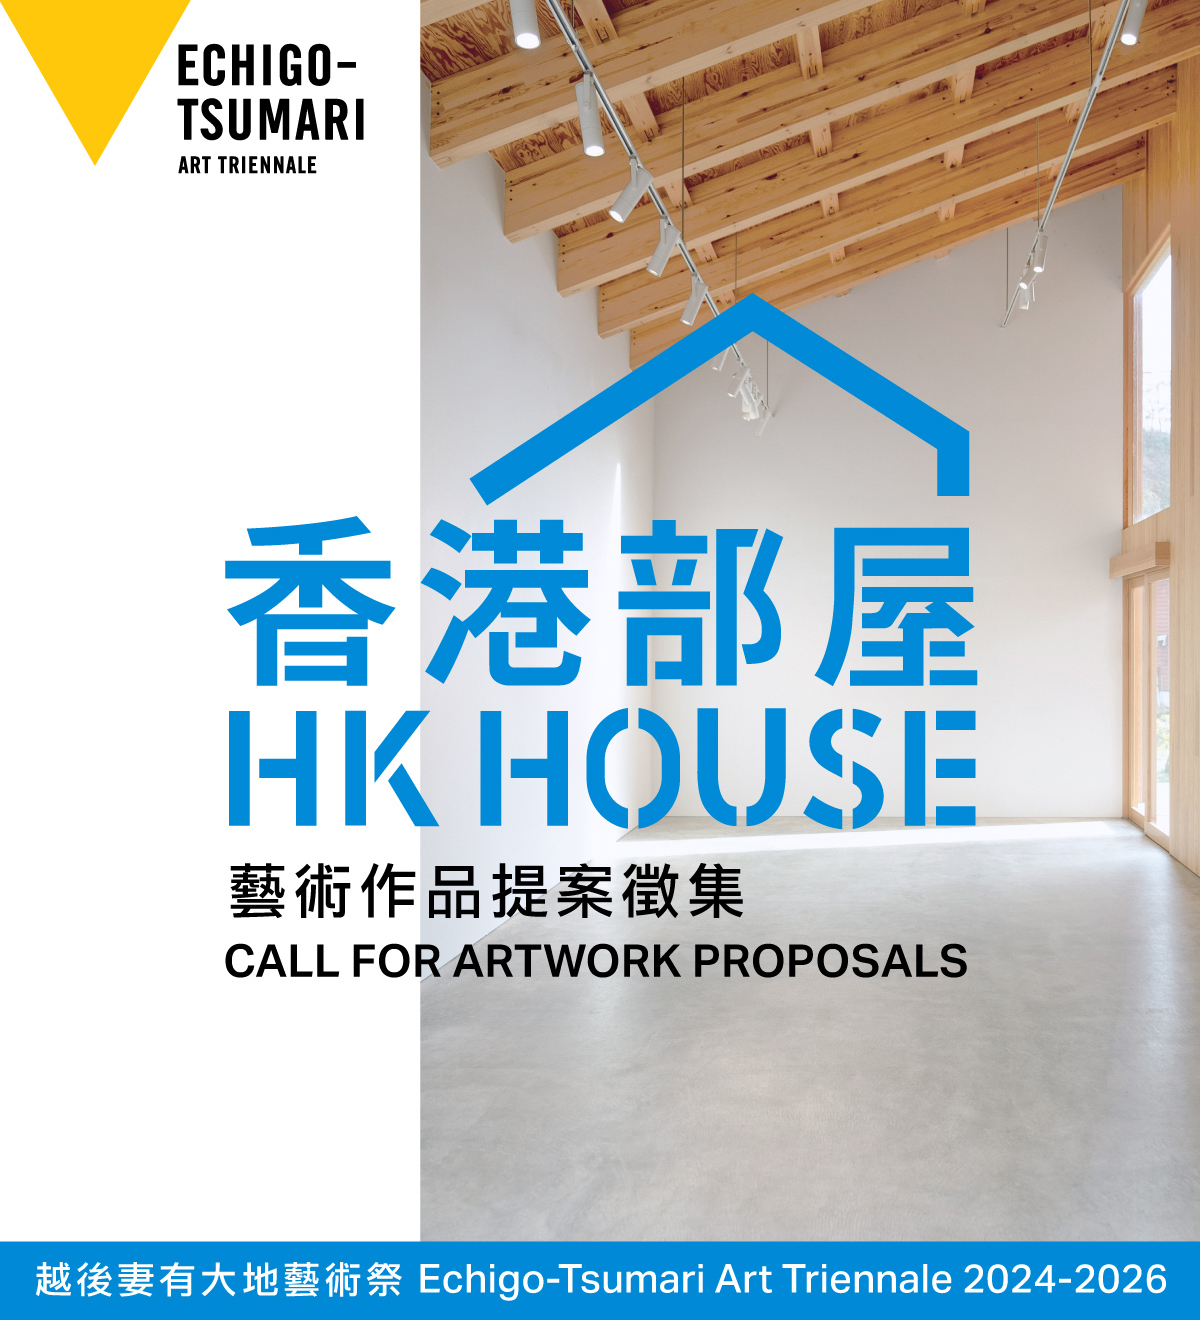 Hong Kong House at Echigo-Tsumari Art Triennale 2024-2026 Call for Artwork Proposals(mobile version)